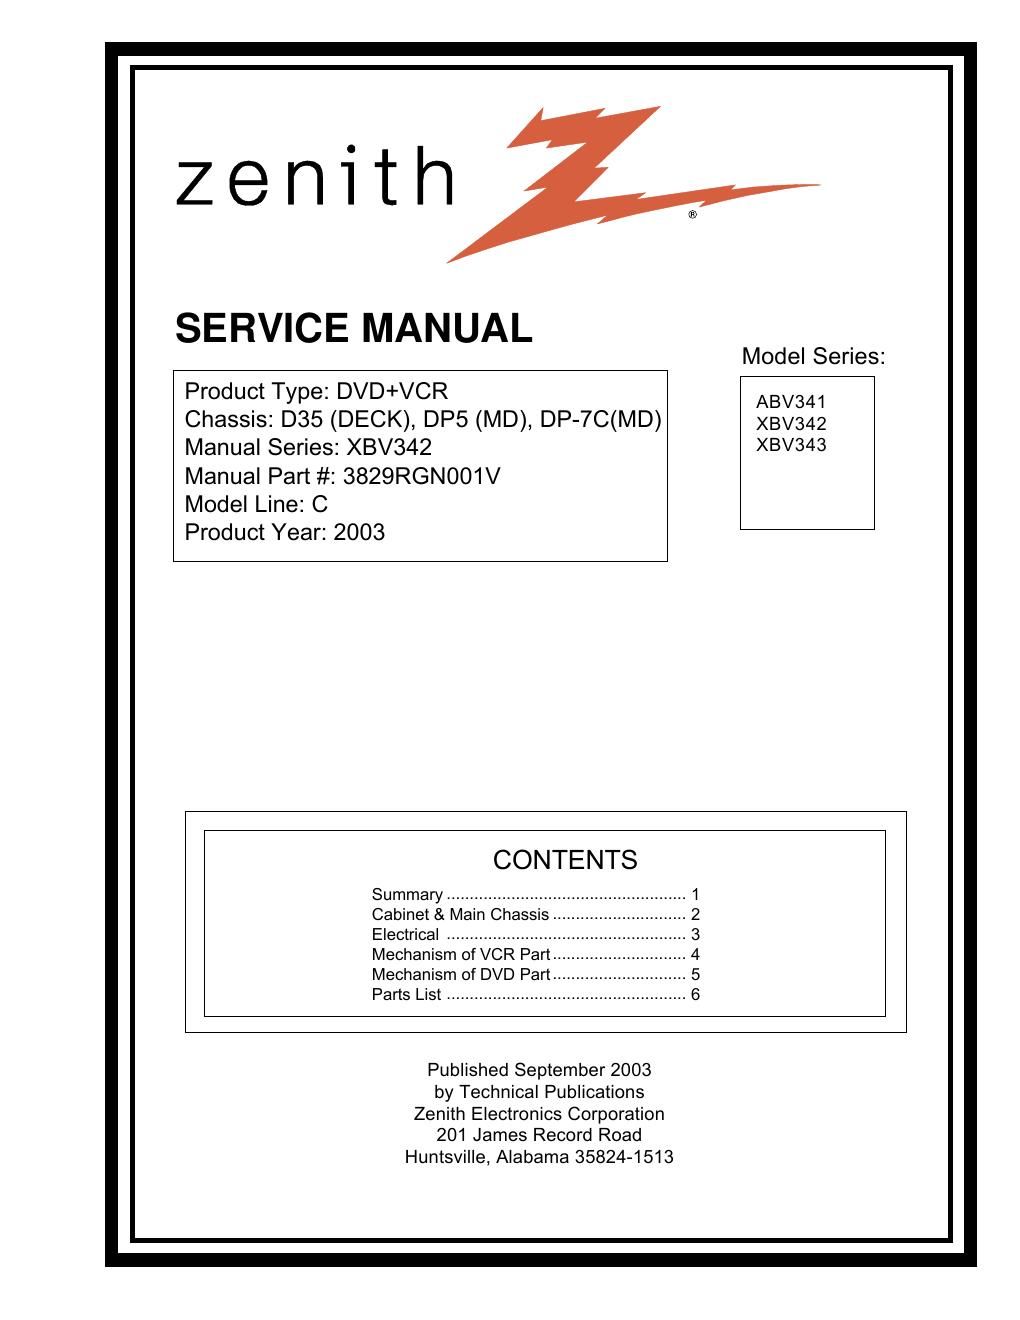 zenith abv 341 service manual